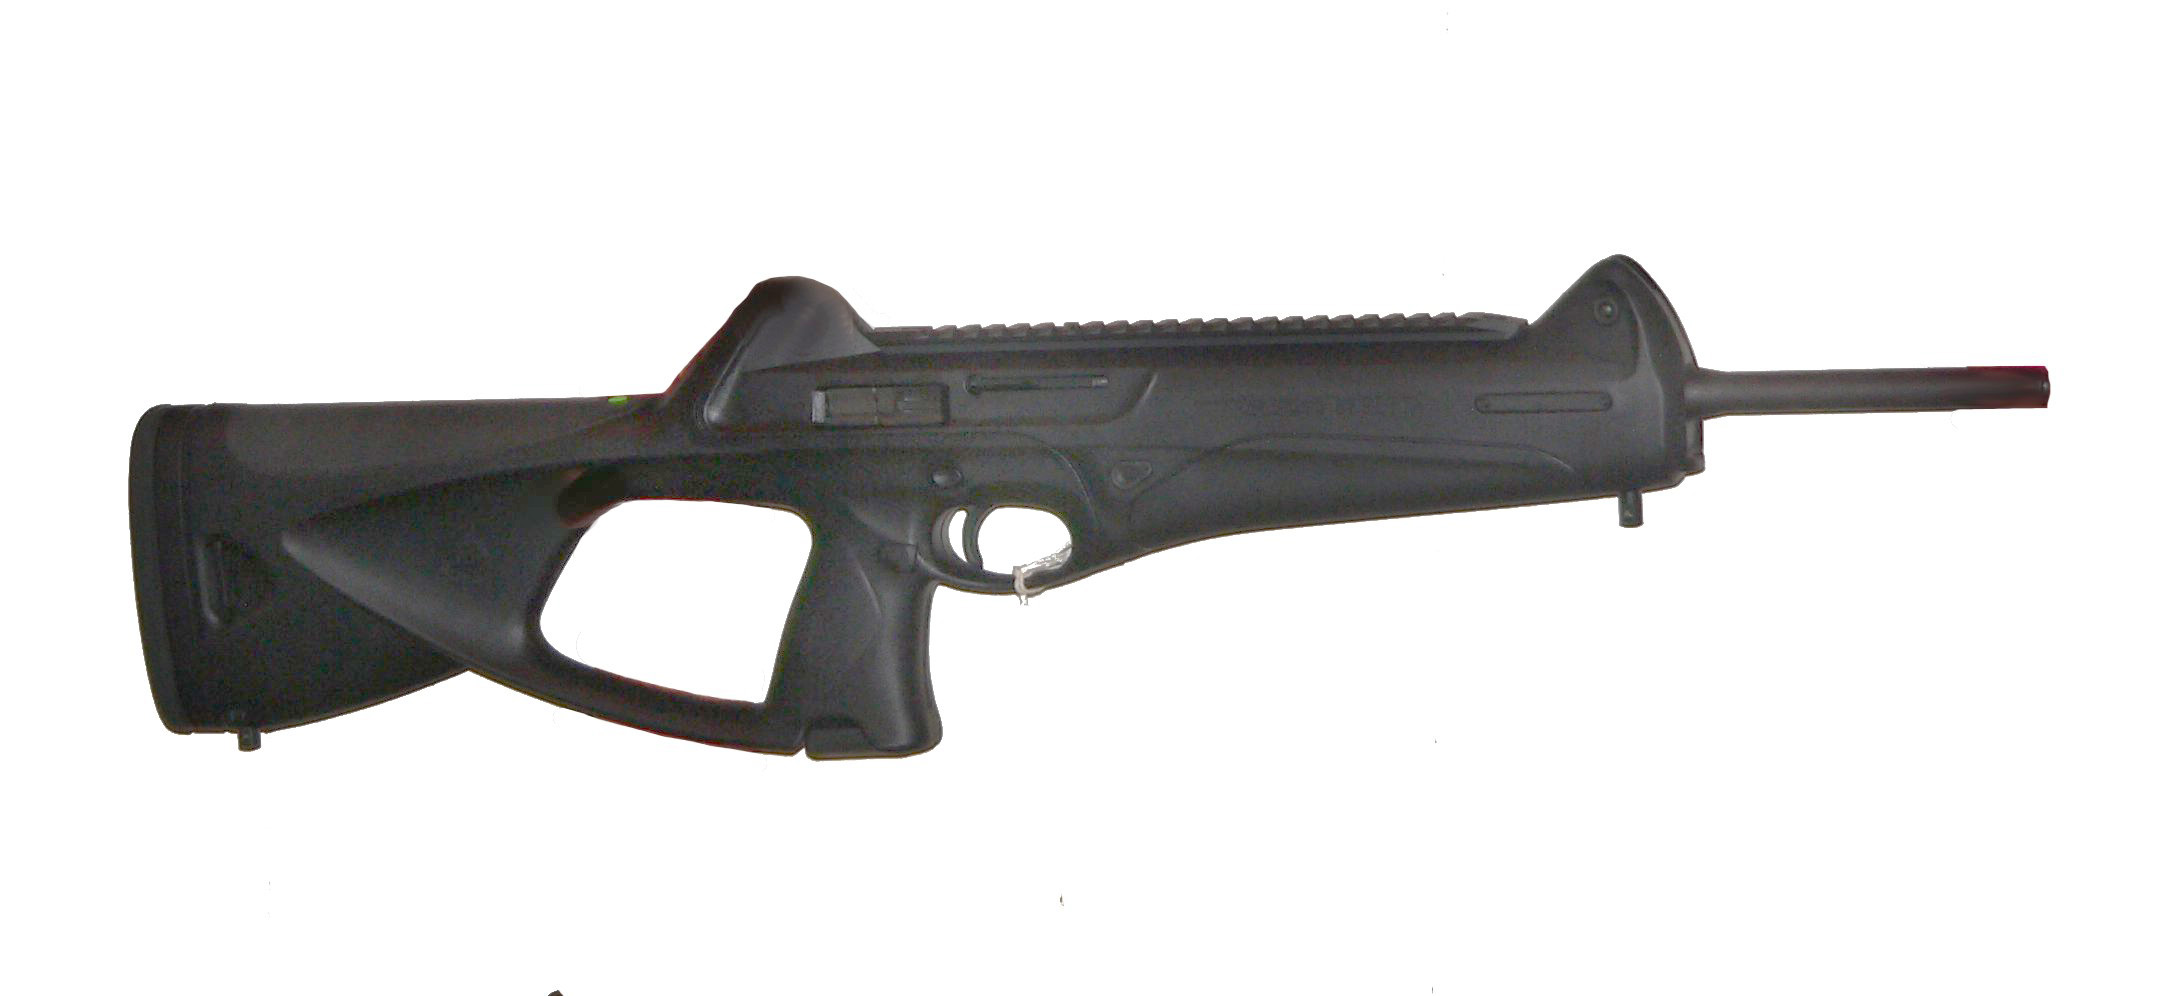 cx4 carbine